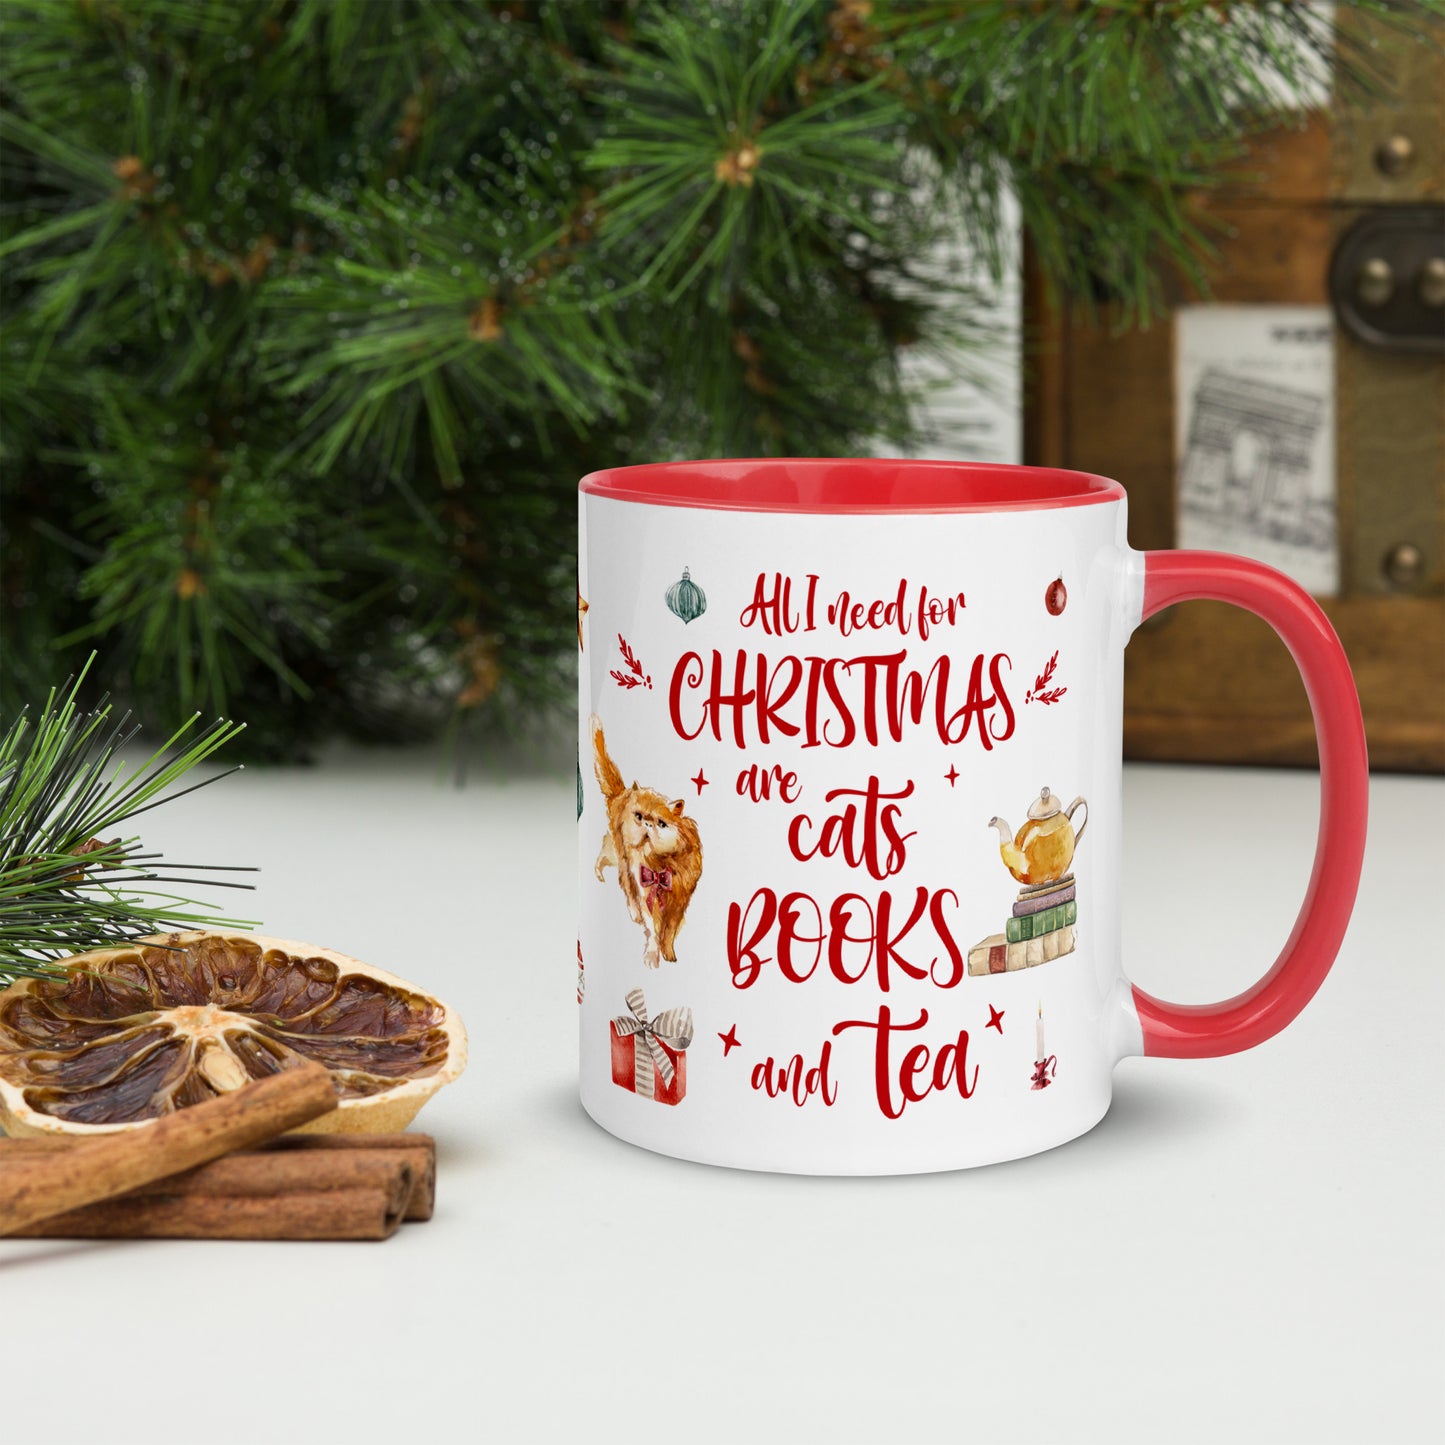 All I Need for Christmas are Cats Books and Tea: Cozy Winter Mug